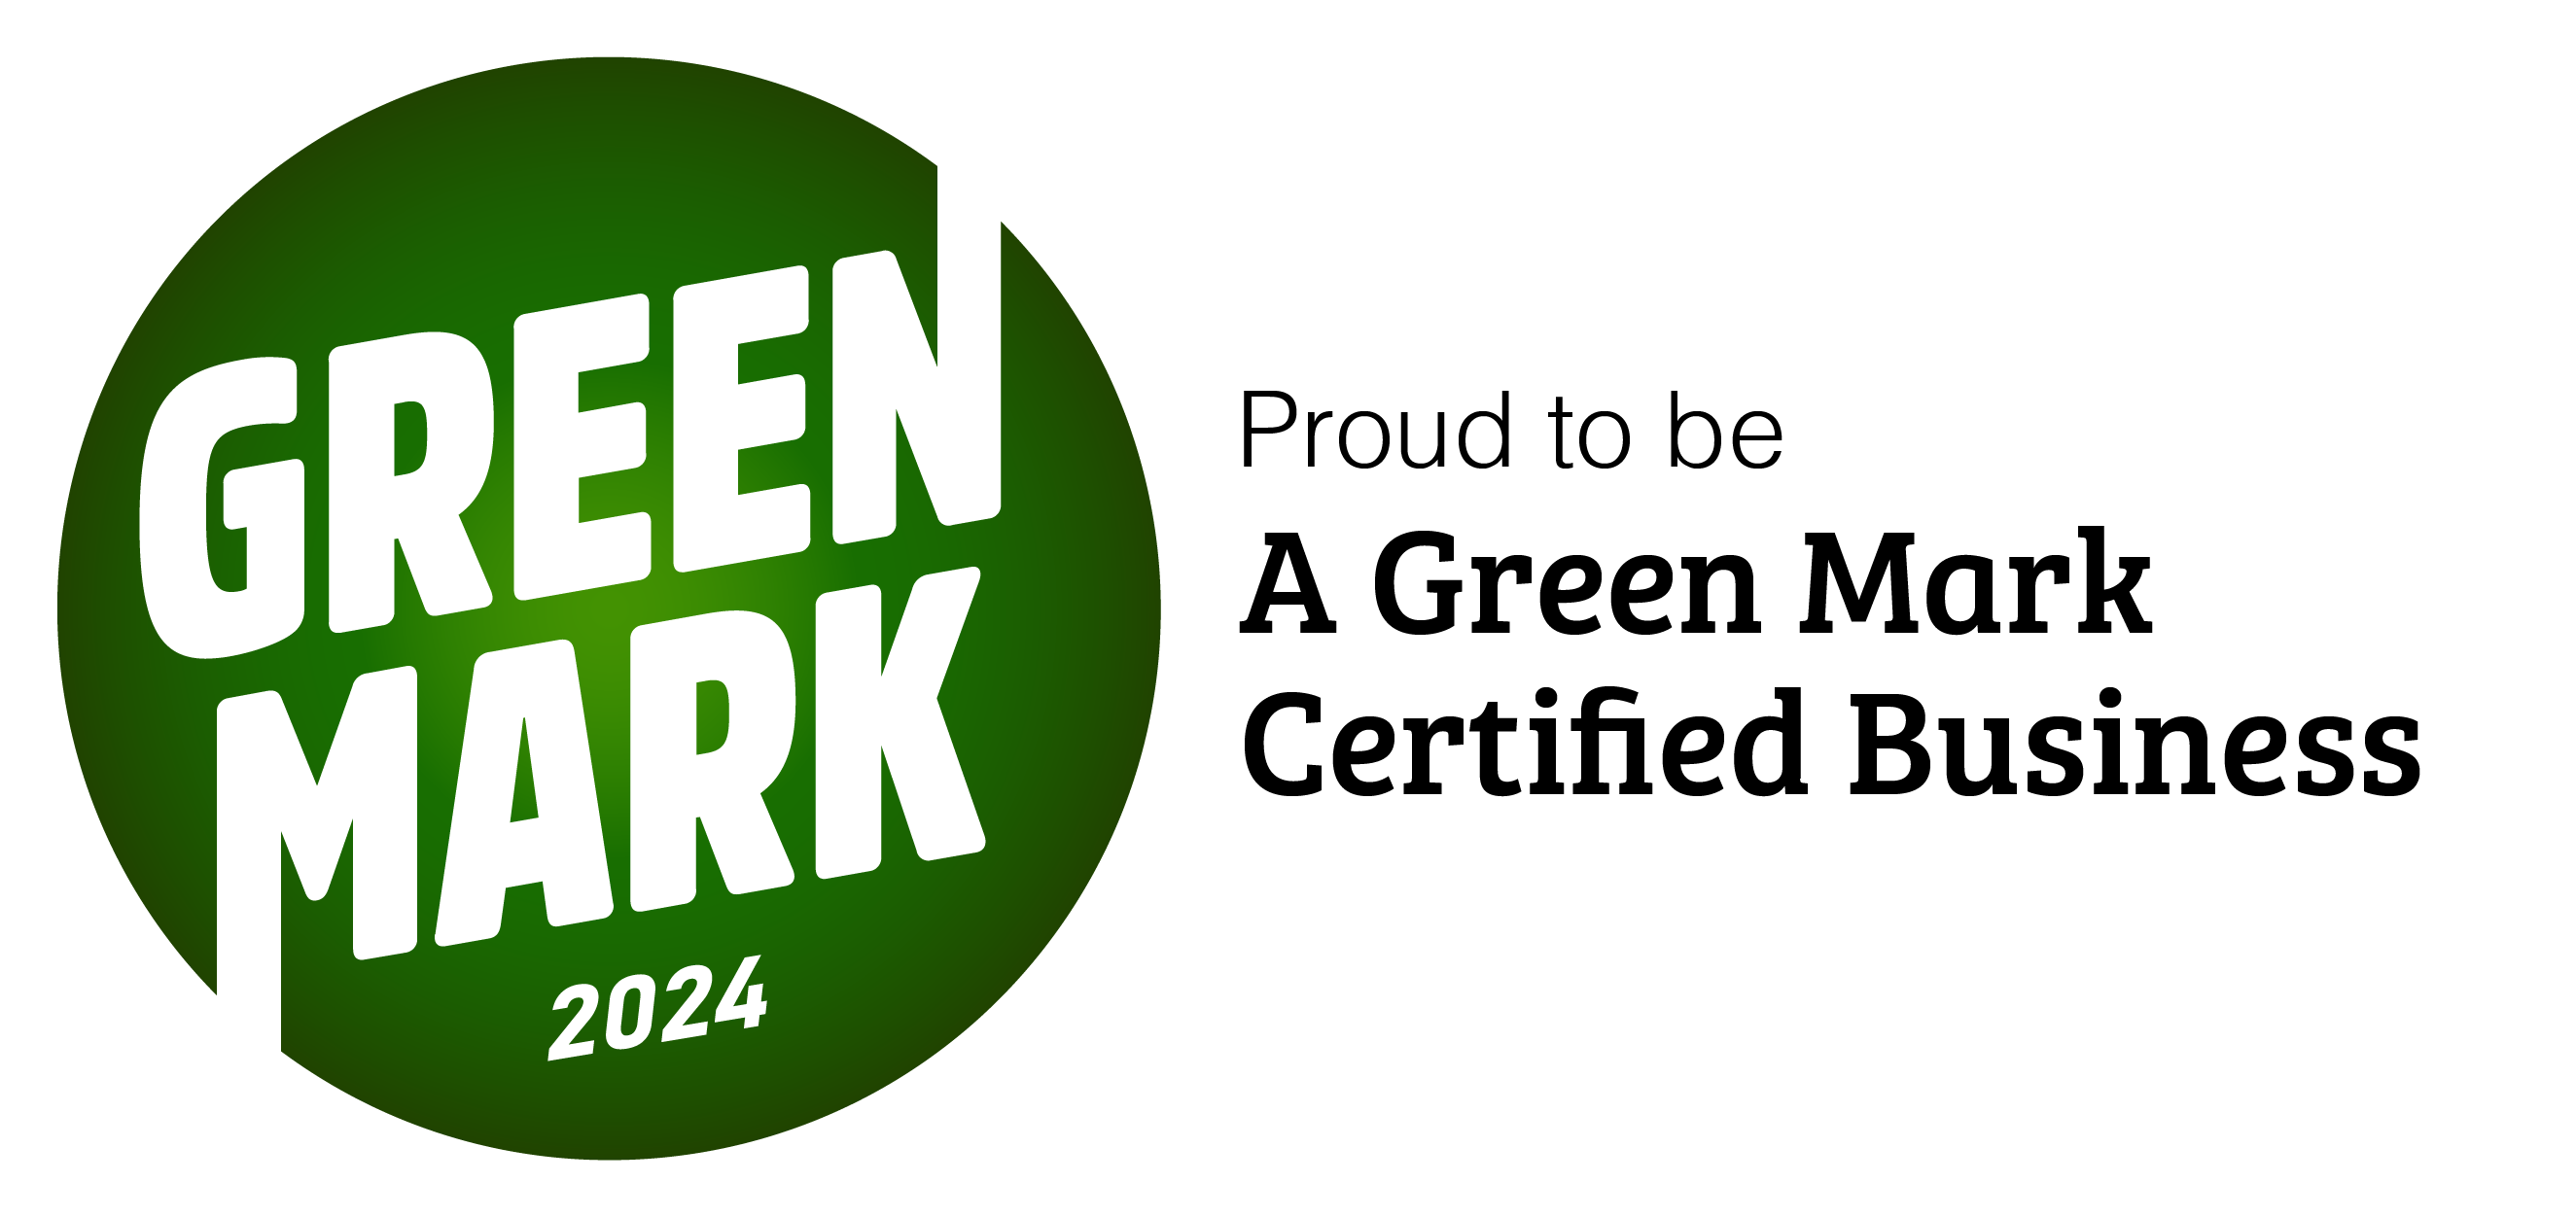 Garrett Kitchens go Green with Green Mark Certification!